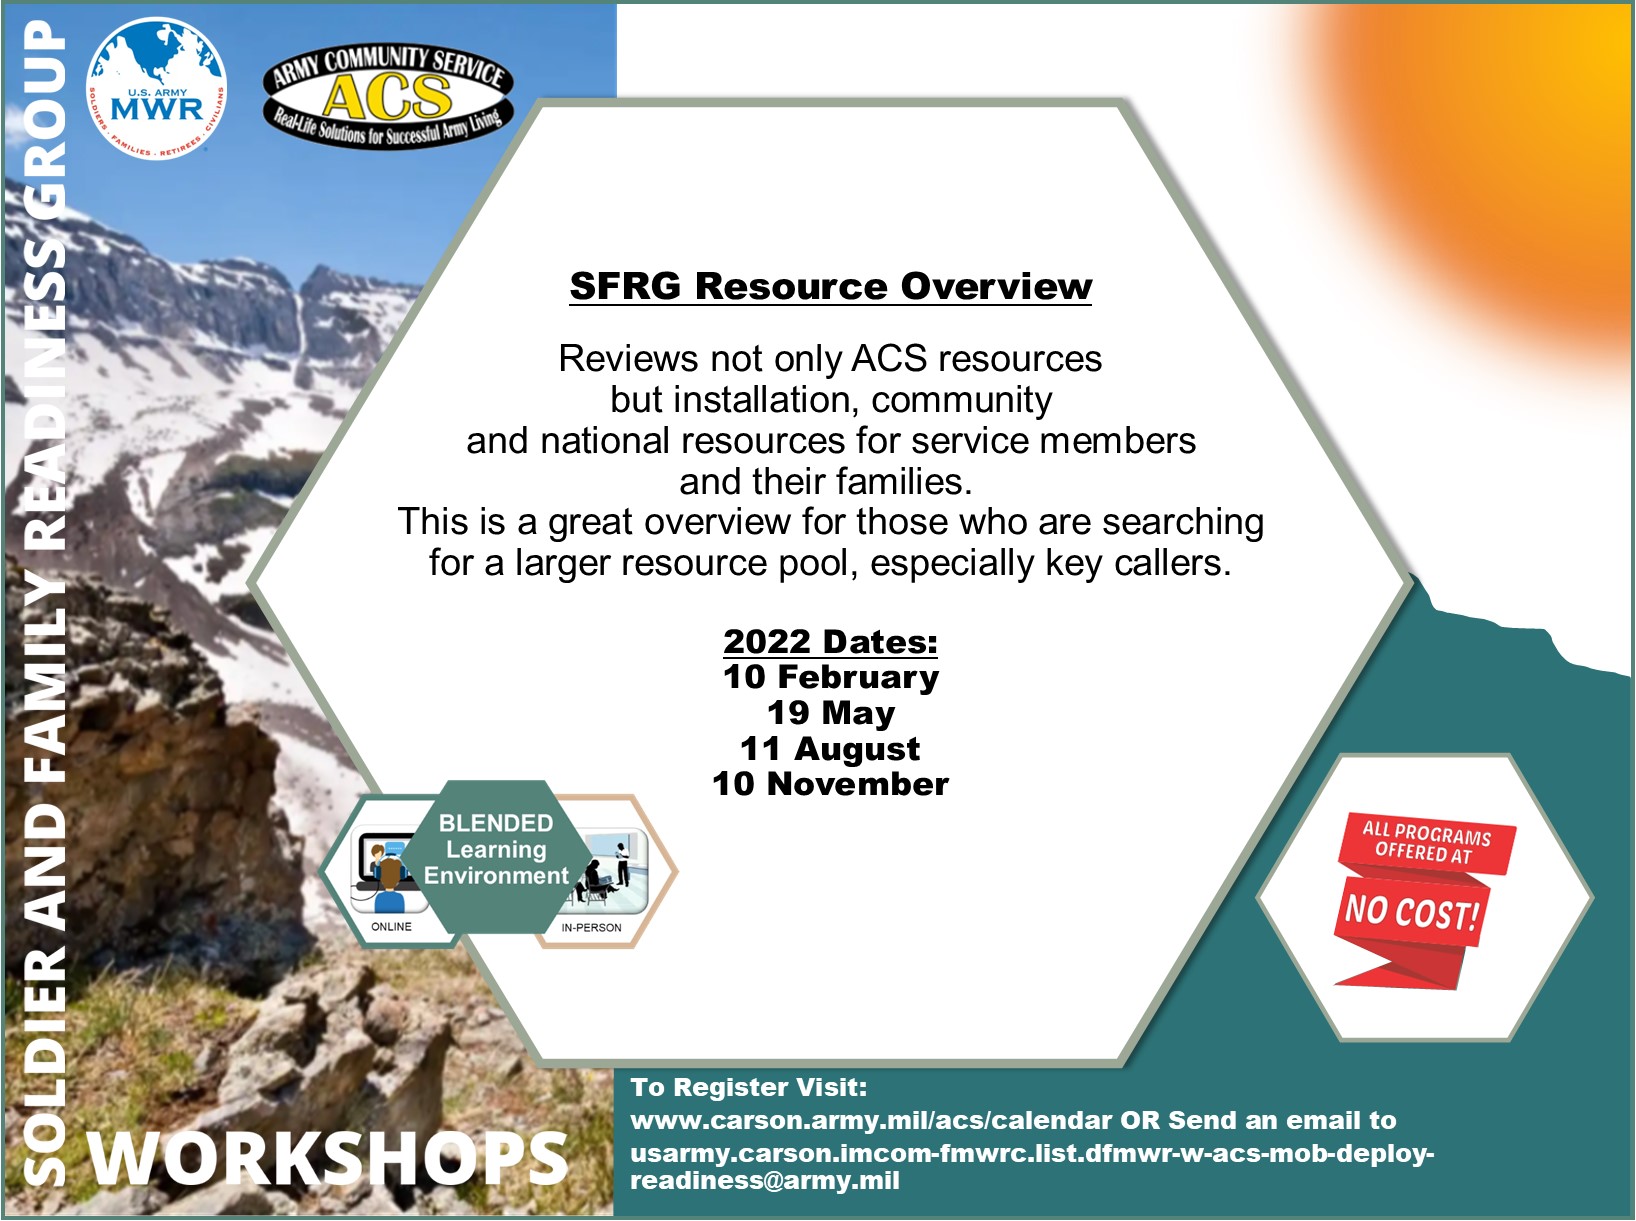 SFRG Resource Overview